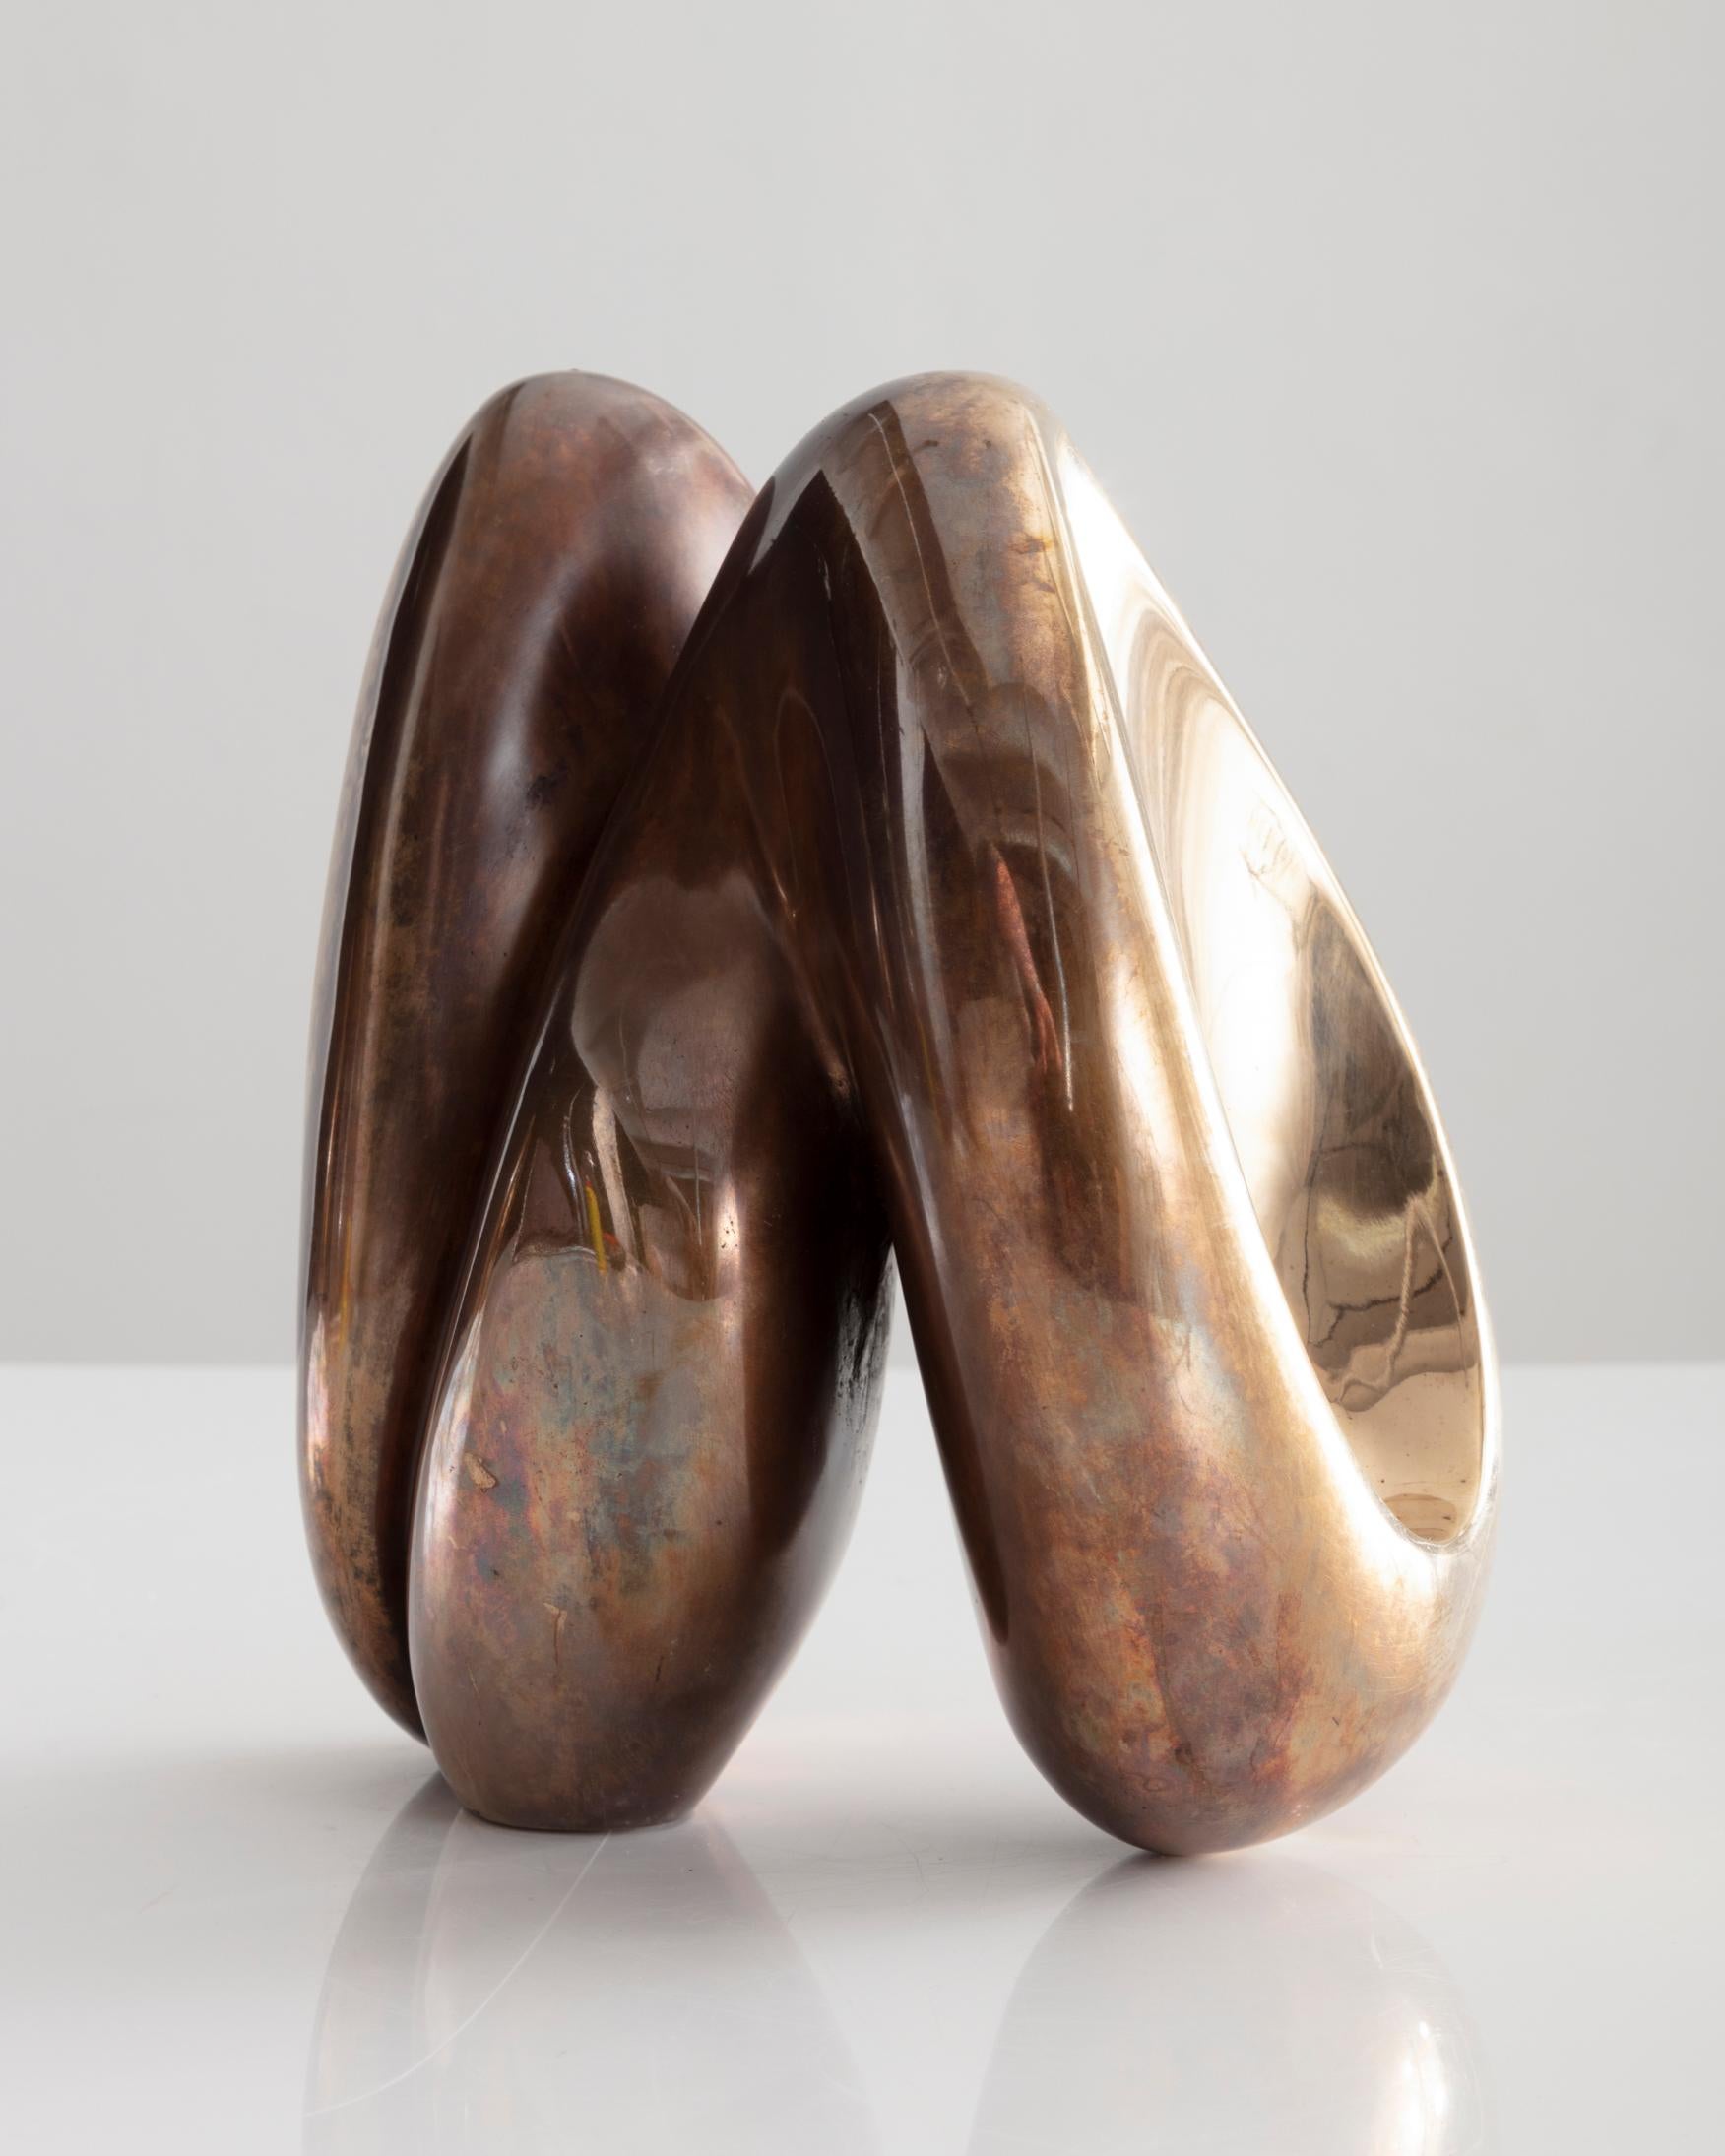 American Fertility Form Double Candleholder in Bronze by Rogan Gregory, 2018